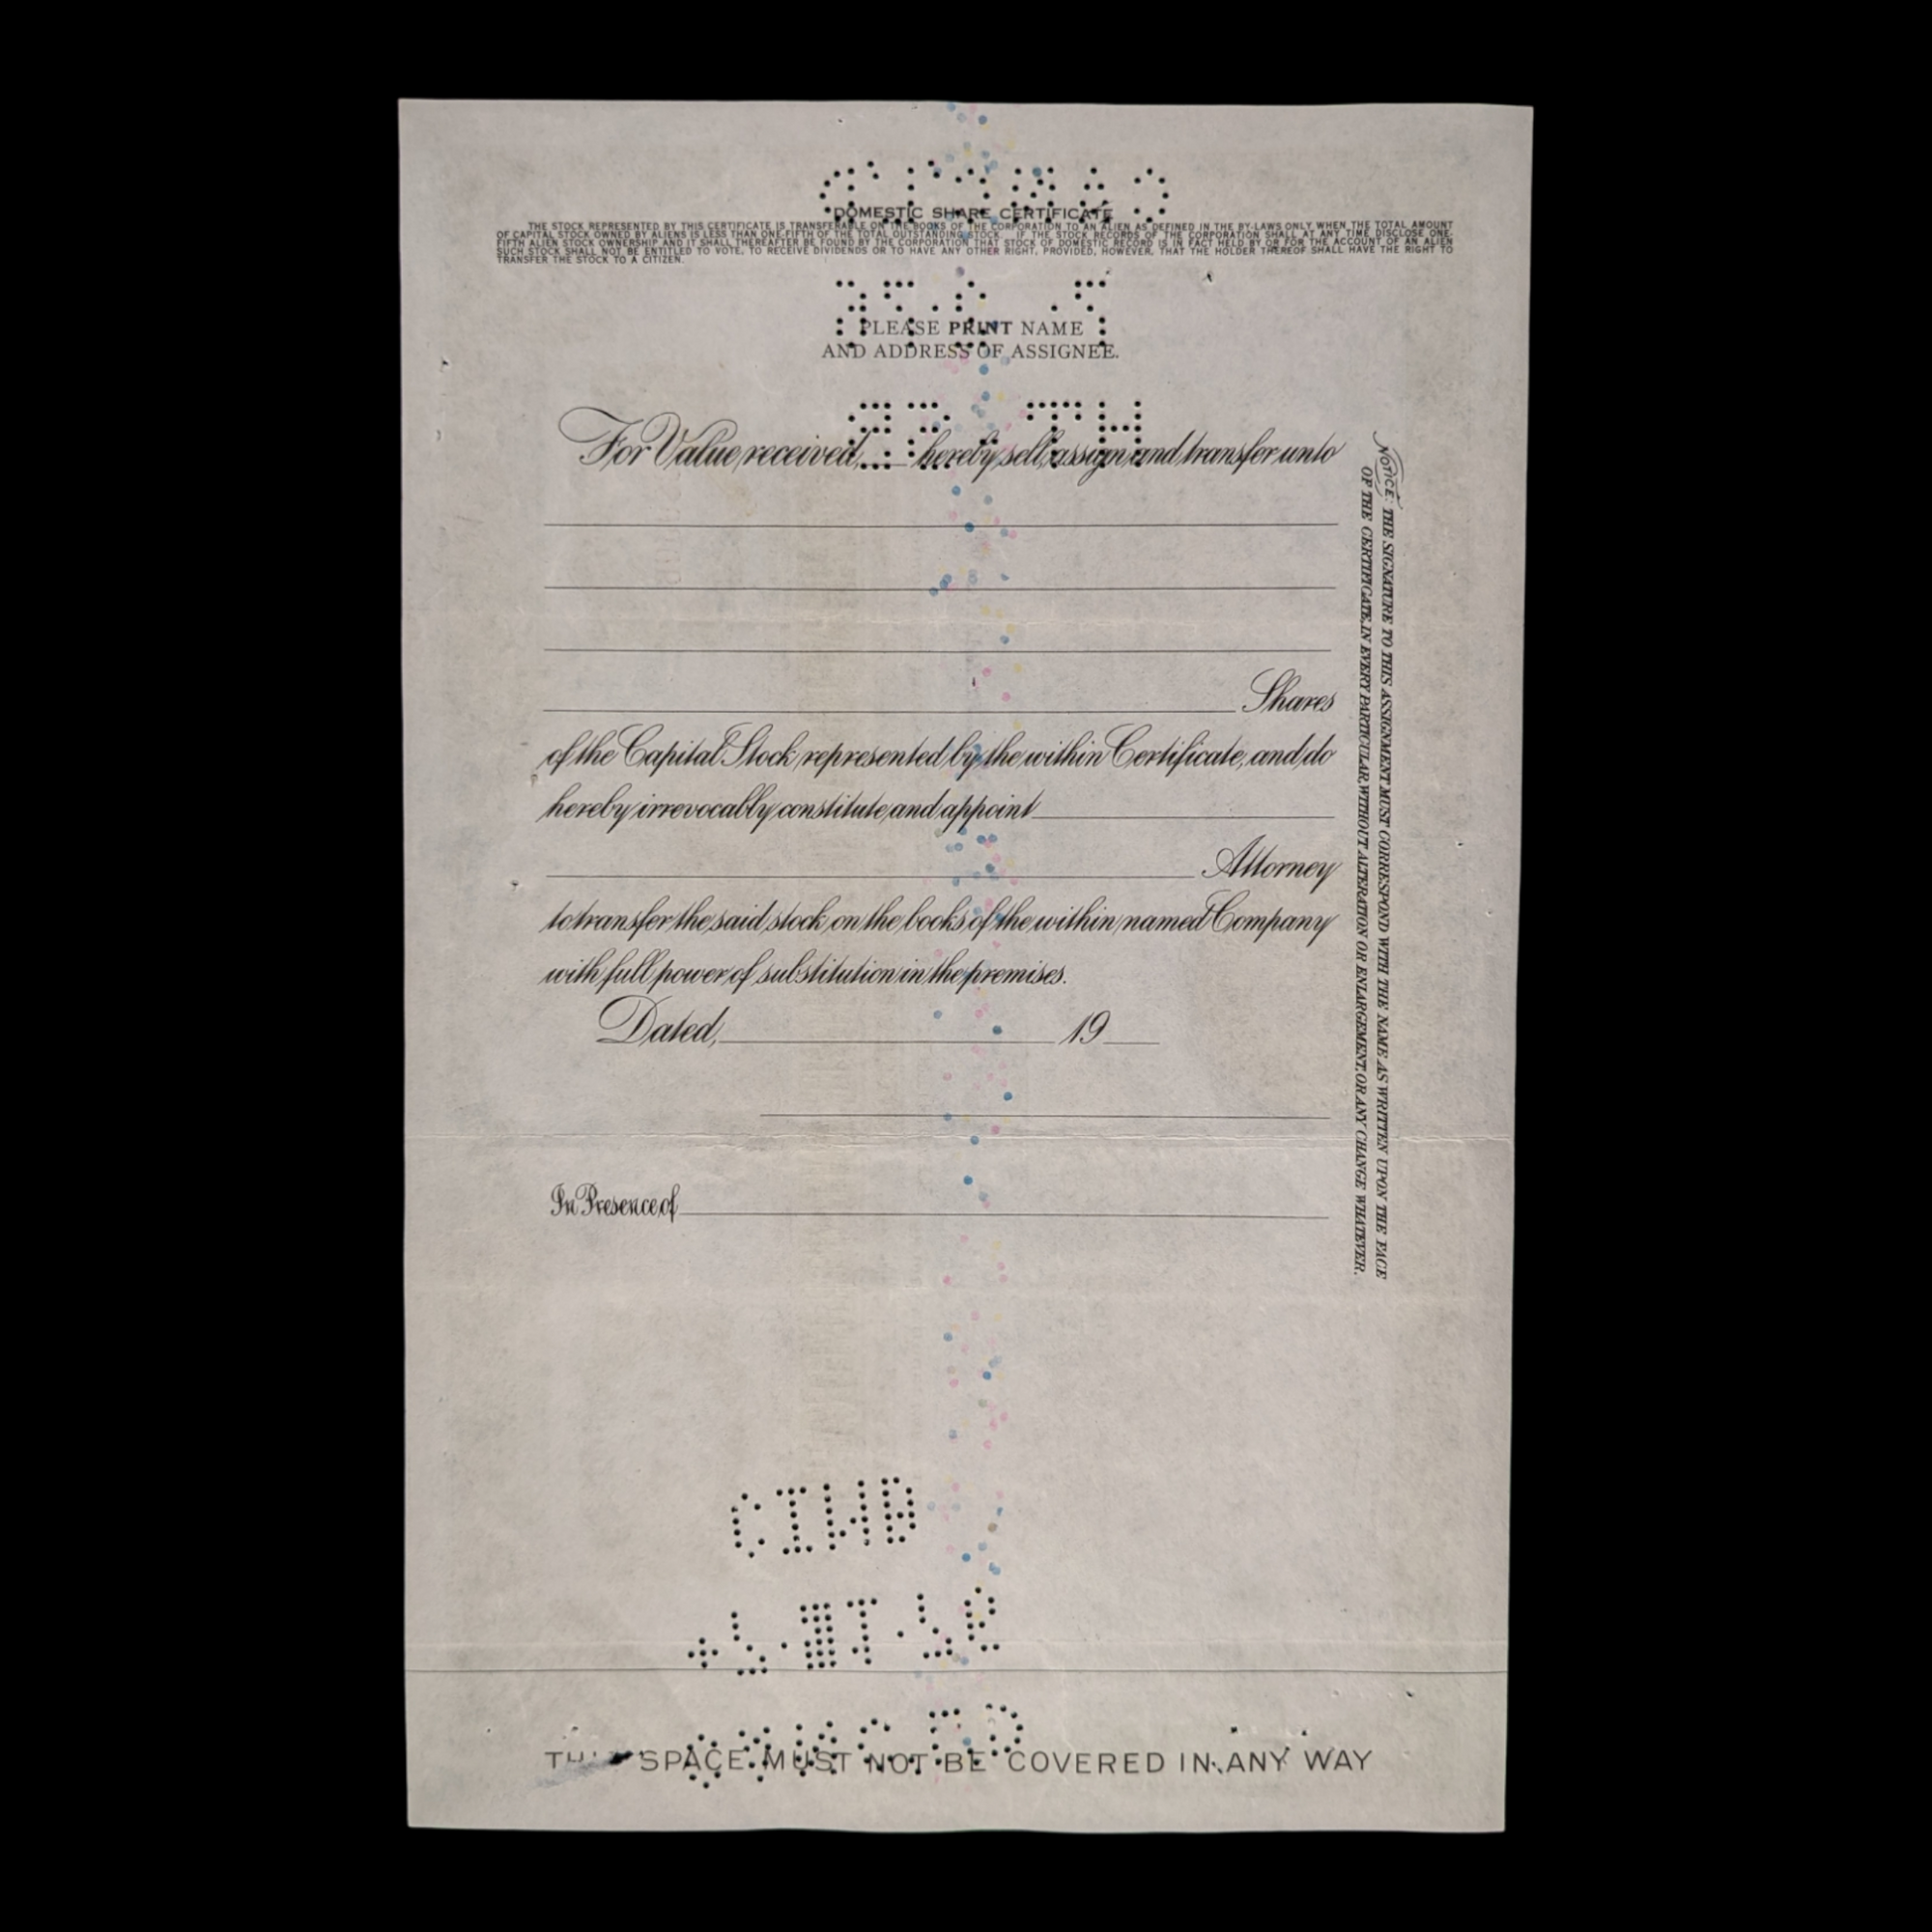 International Telephone & Telegraph (ITT) Stock Certificate - 1940's - New York, NY